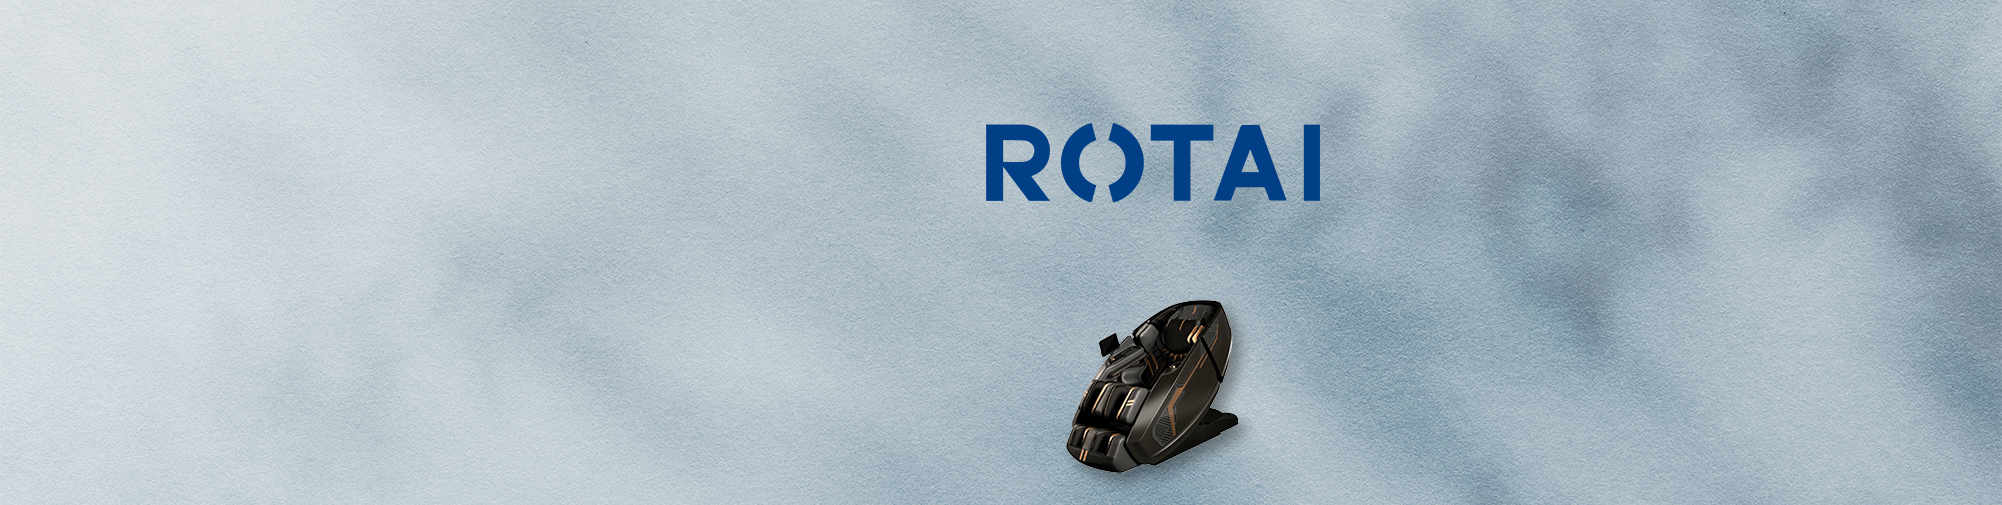 ROTAI | Massage Stull Welt